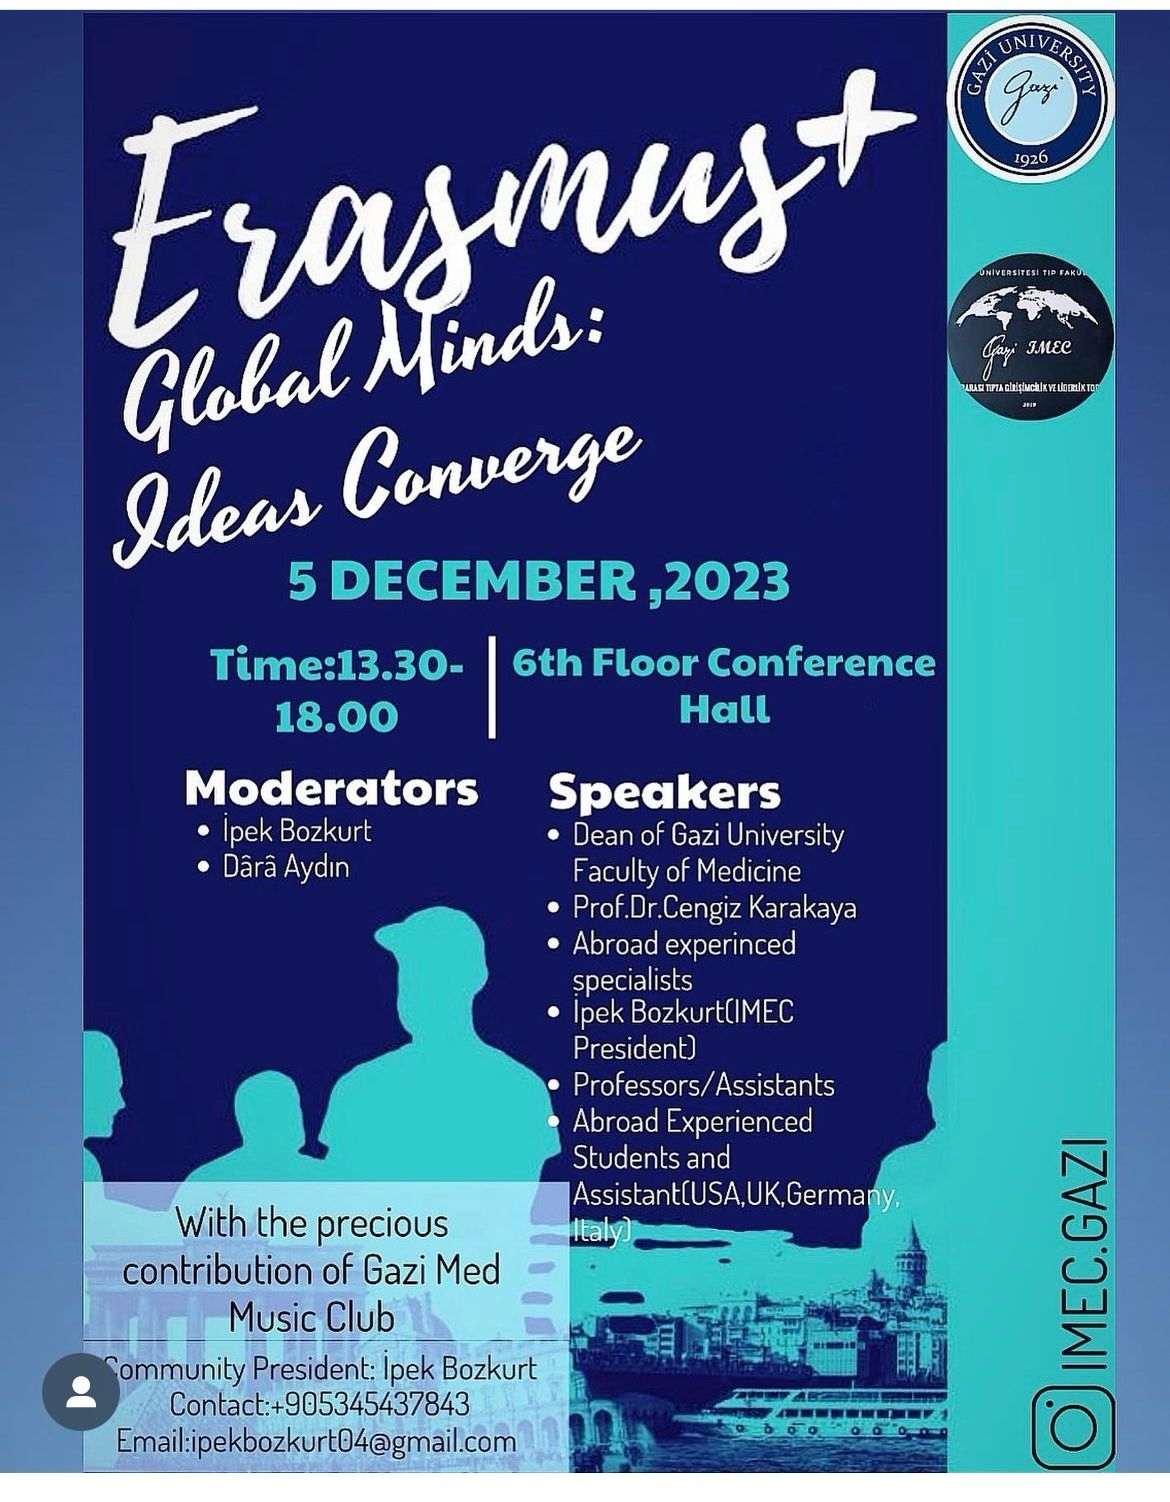 Erasmus Global Minds-1